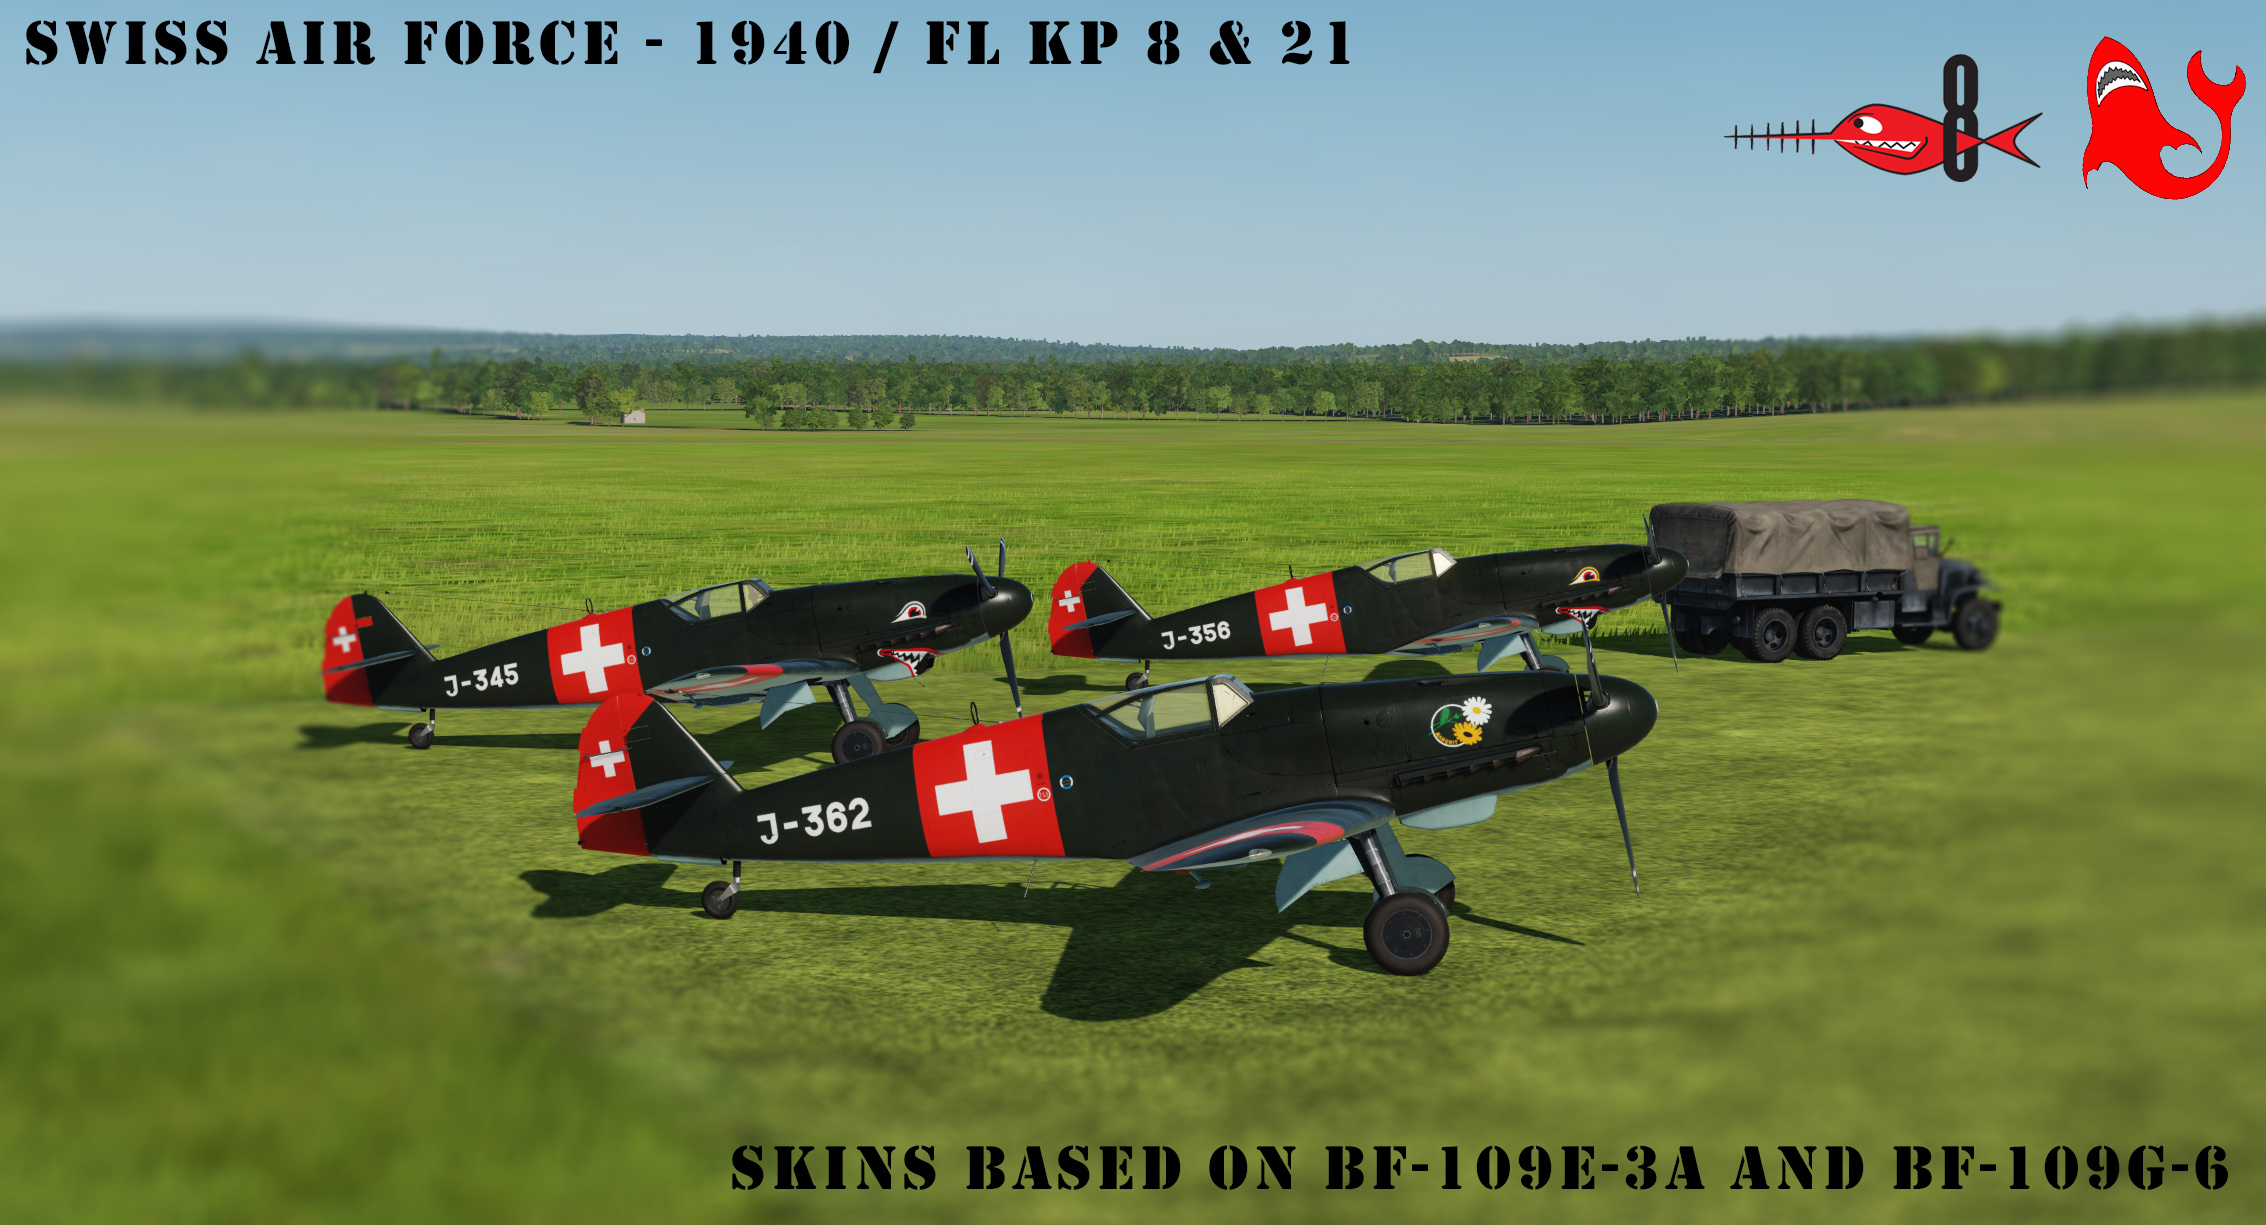 [Bf-109K-4] Swiss Air Force 1940 - Fl Kp 8 & 21